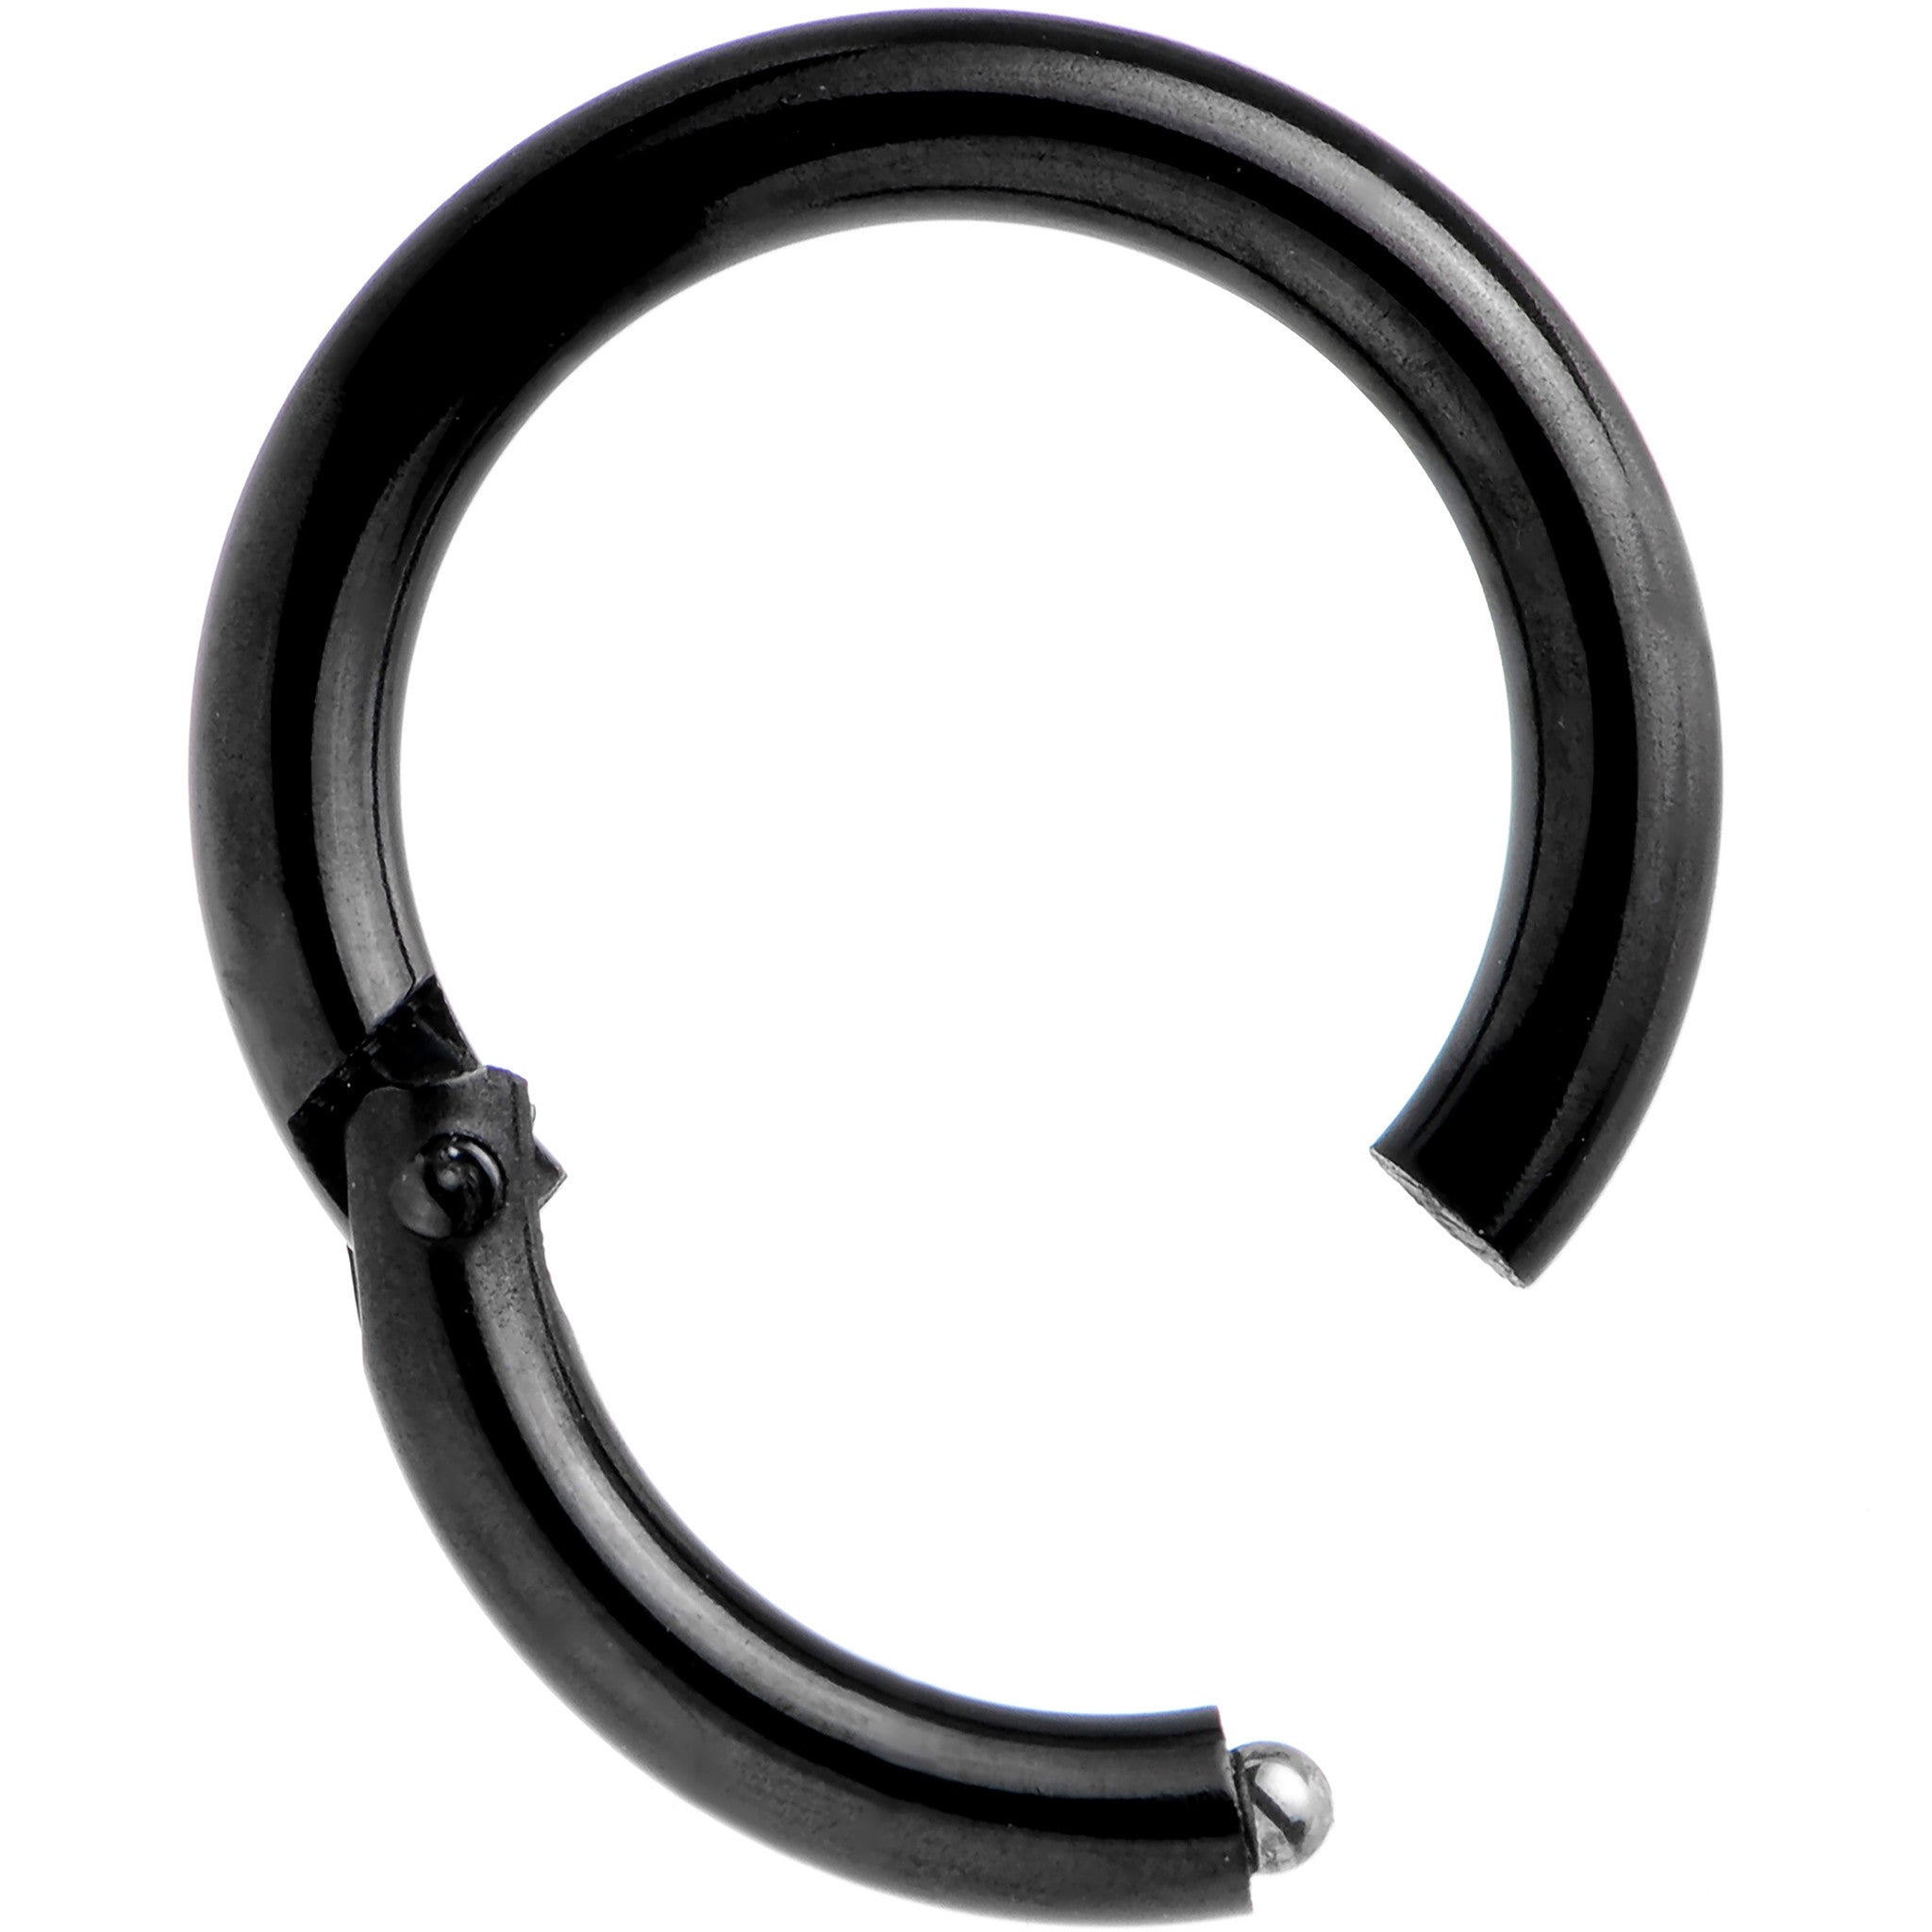 14 Gauge 5/16 Black Anodized Hinged Segment Ring